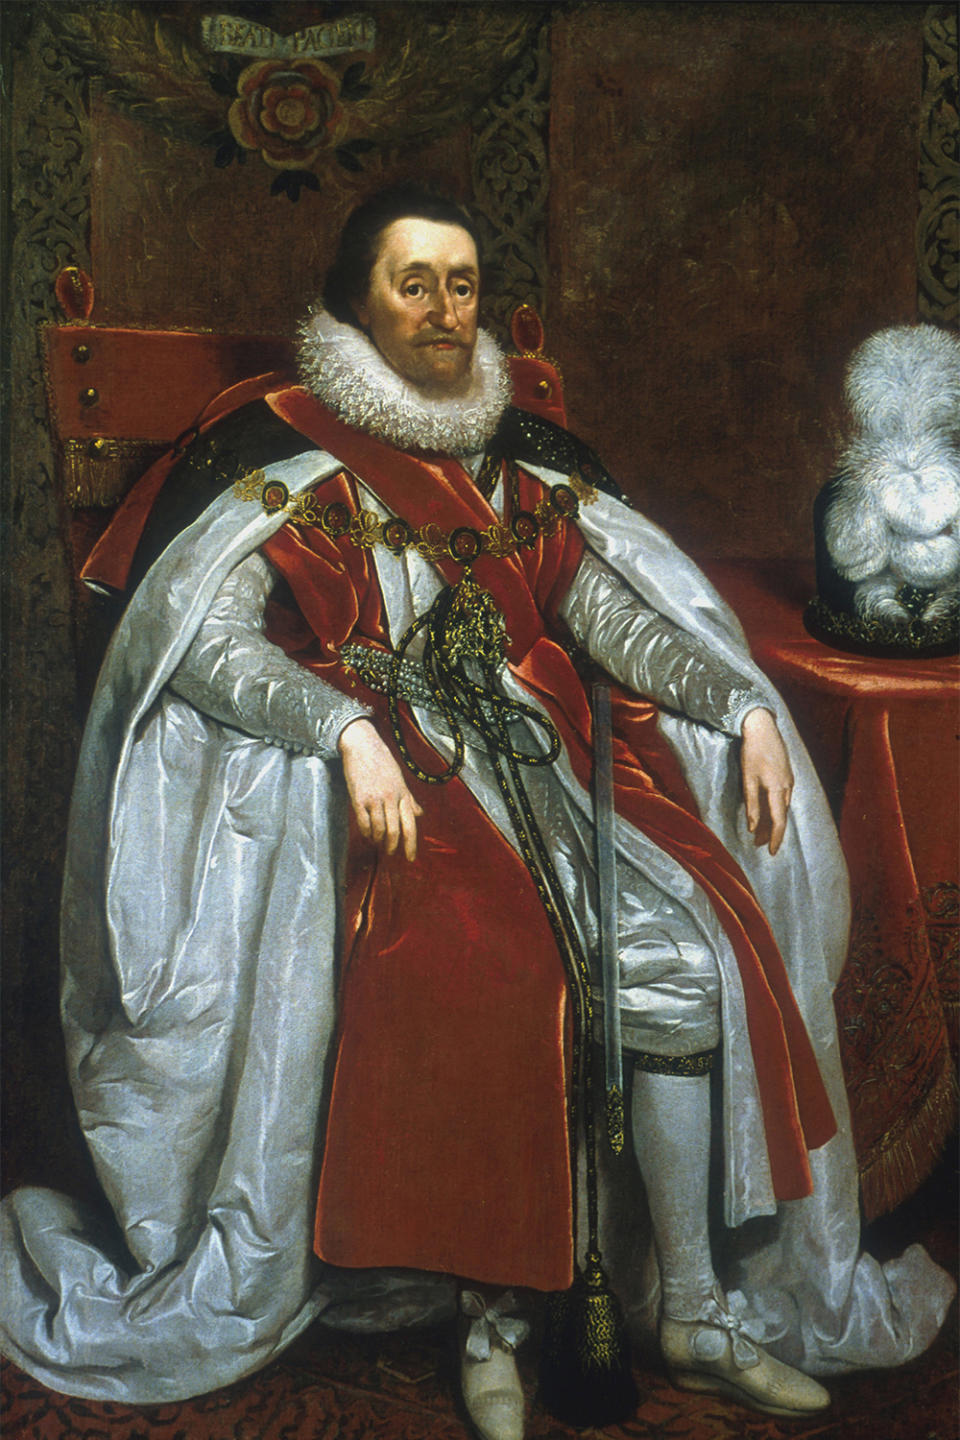 King James VI of Scotland